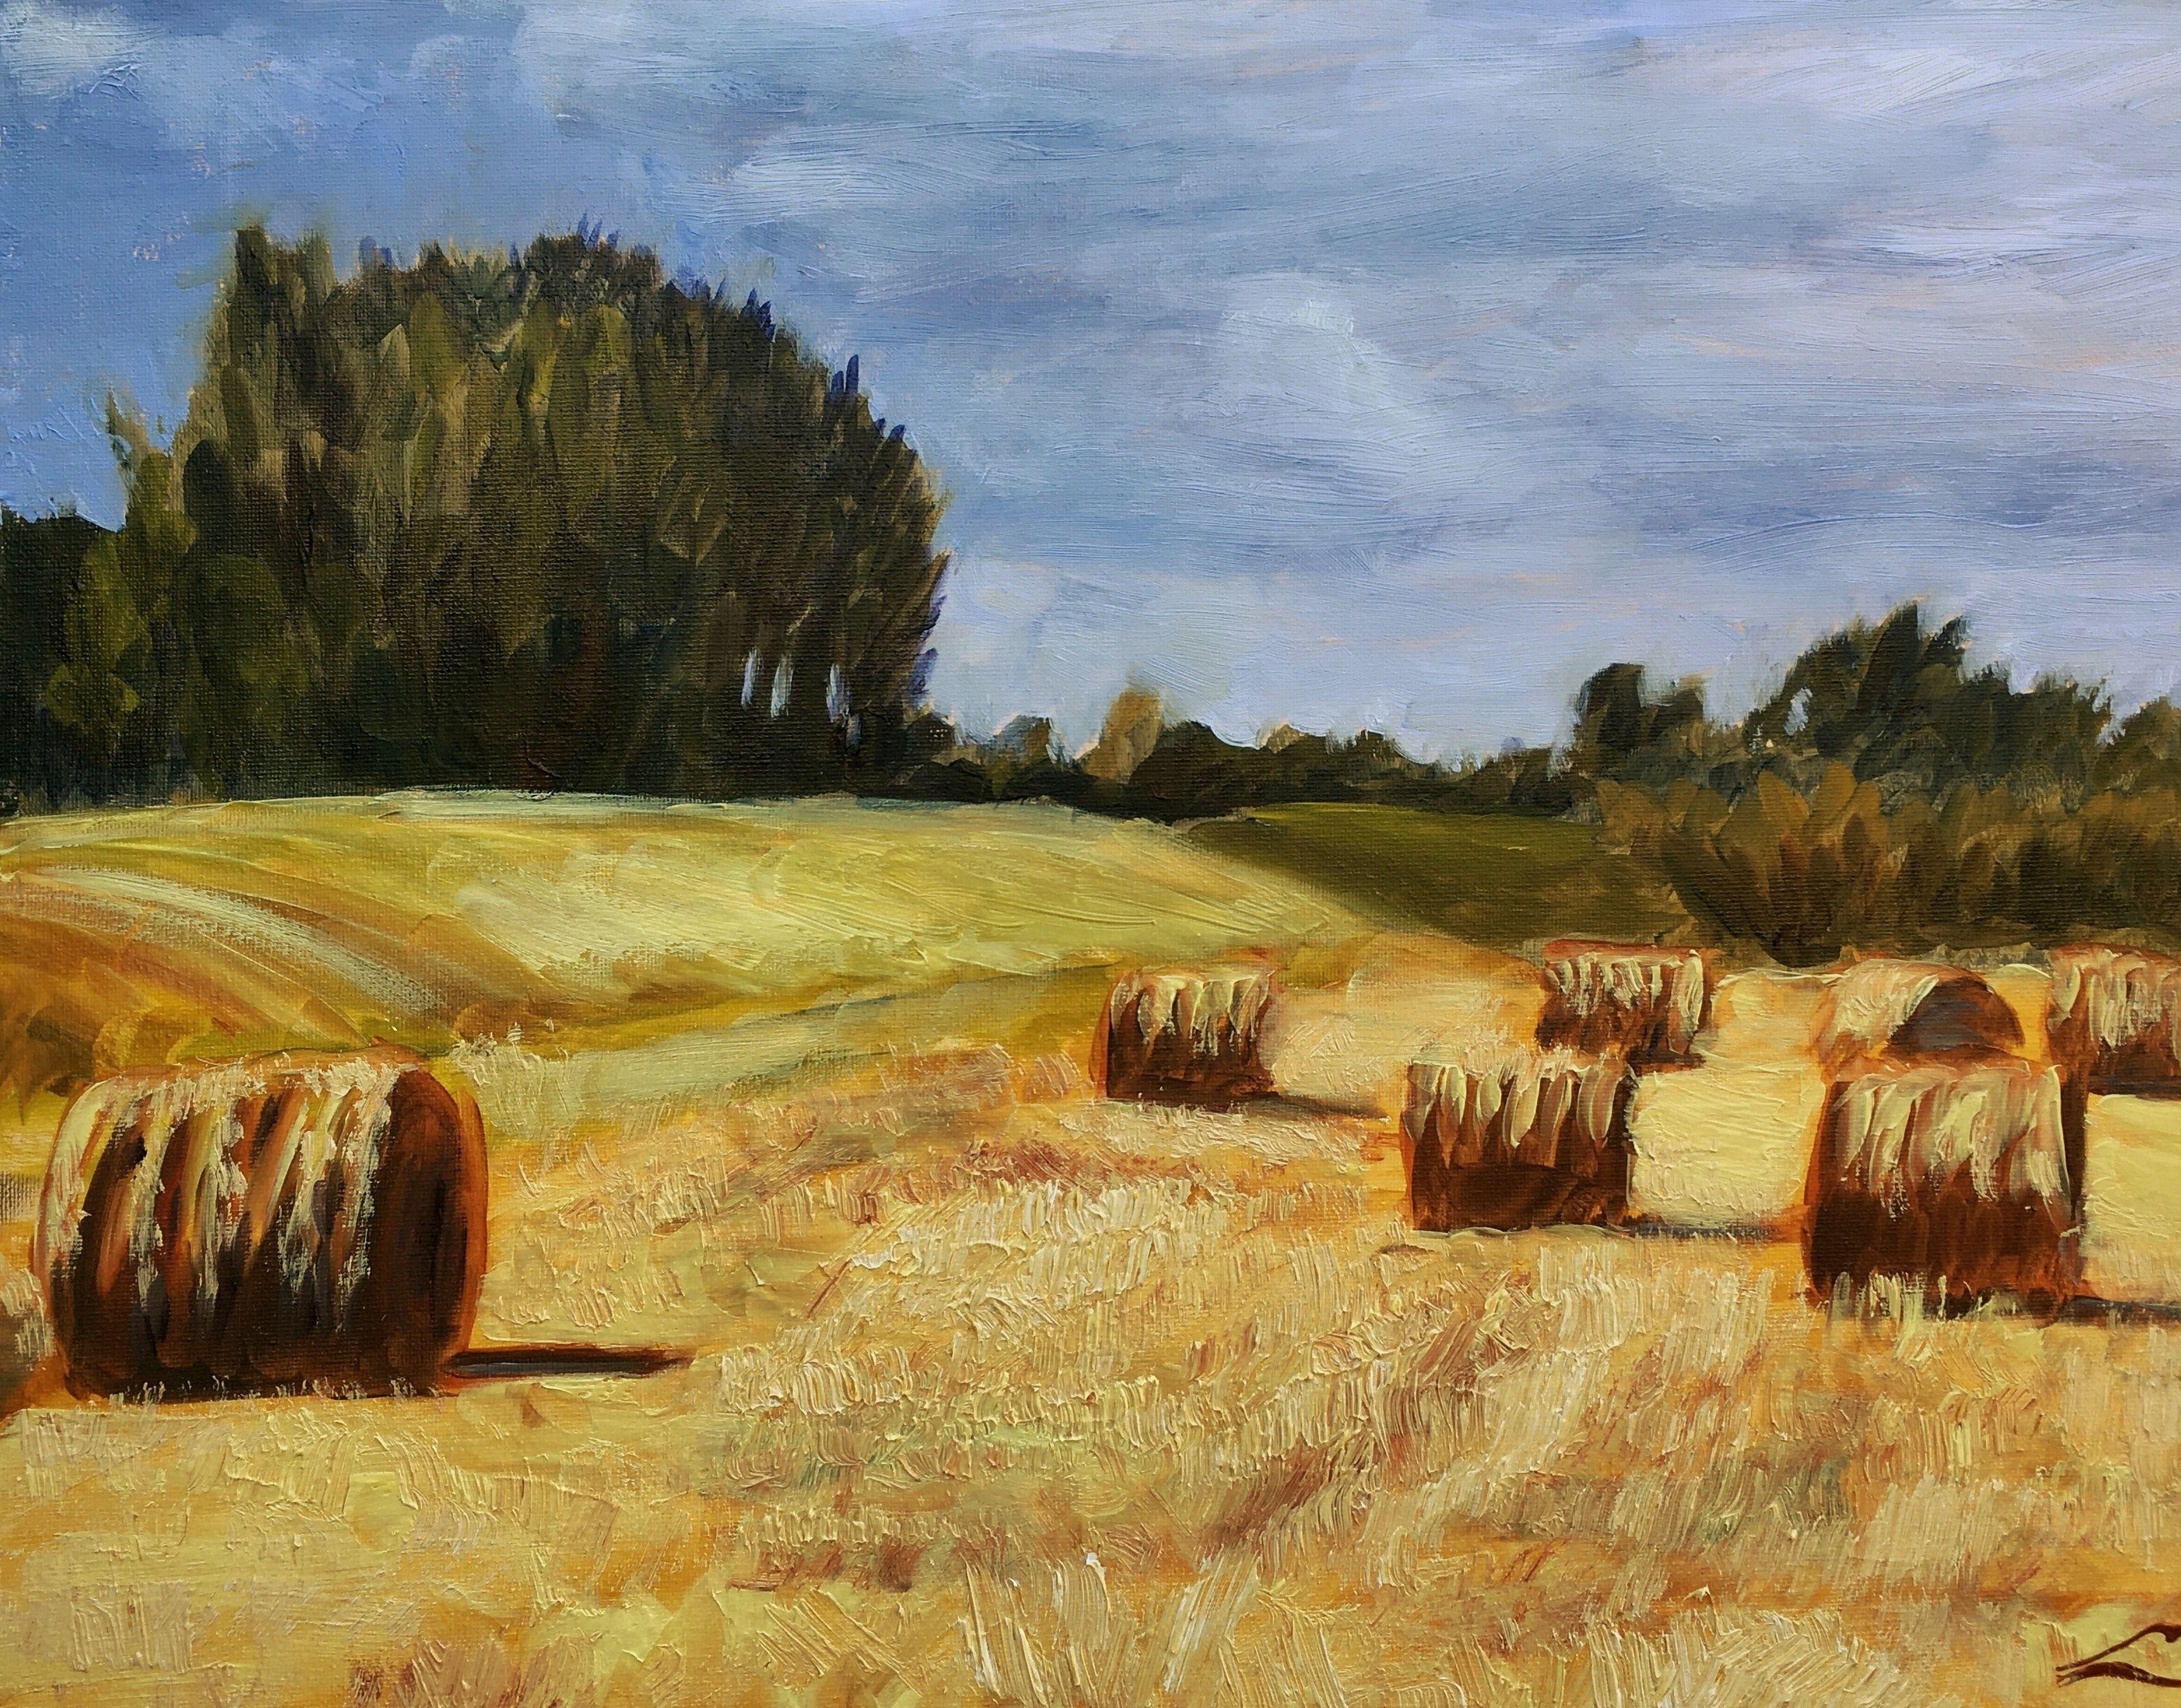 Elena Sokolova Landscape Painting - Haystacks in Westland, Painting, Oil on Canvas